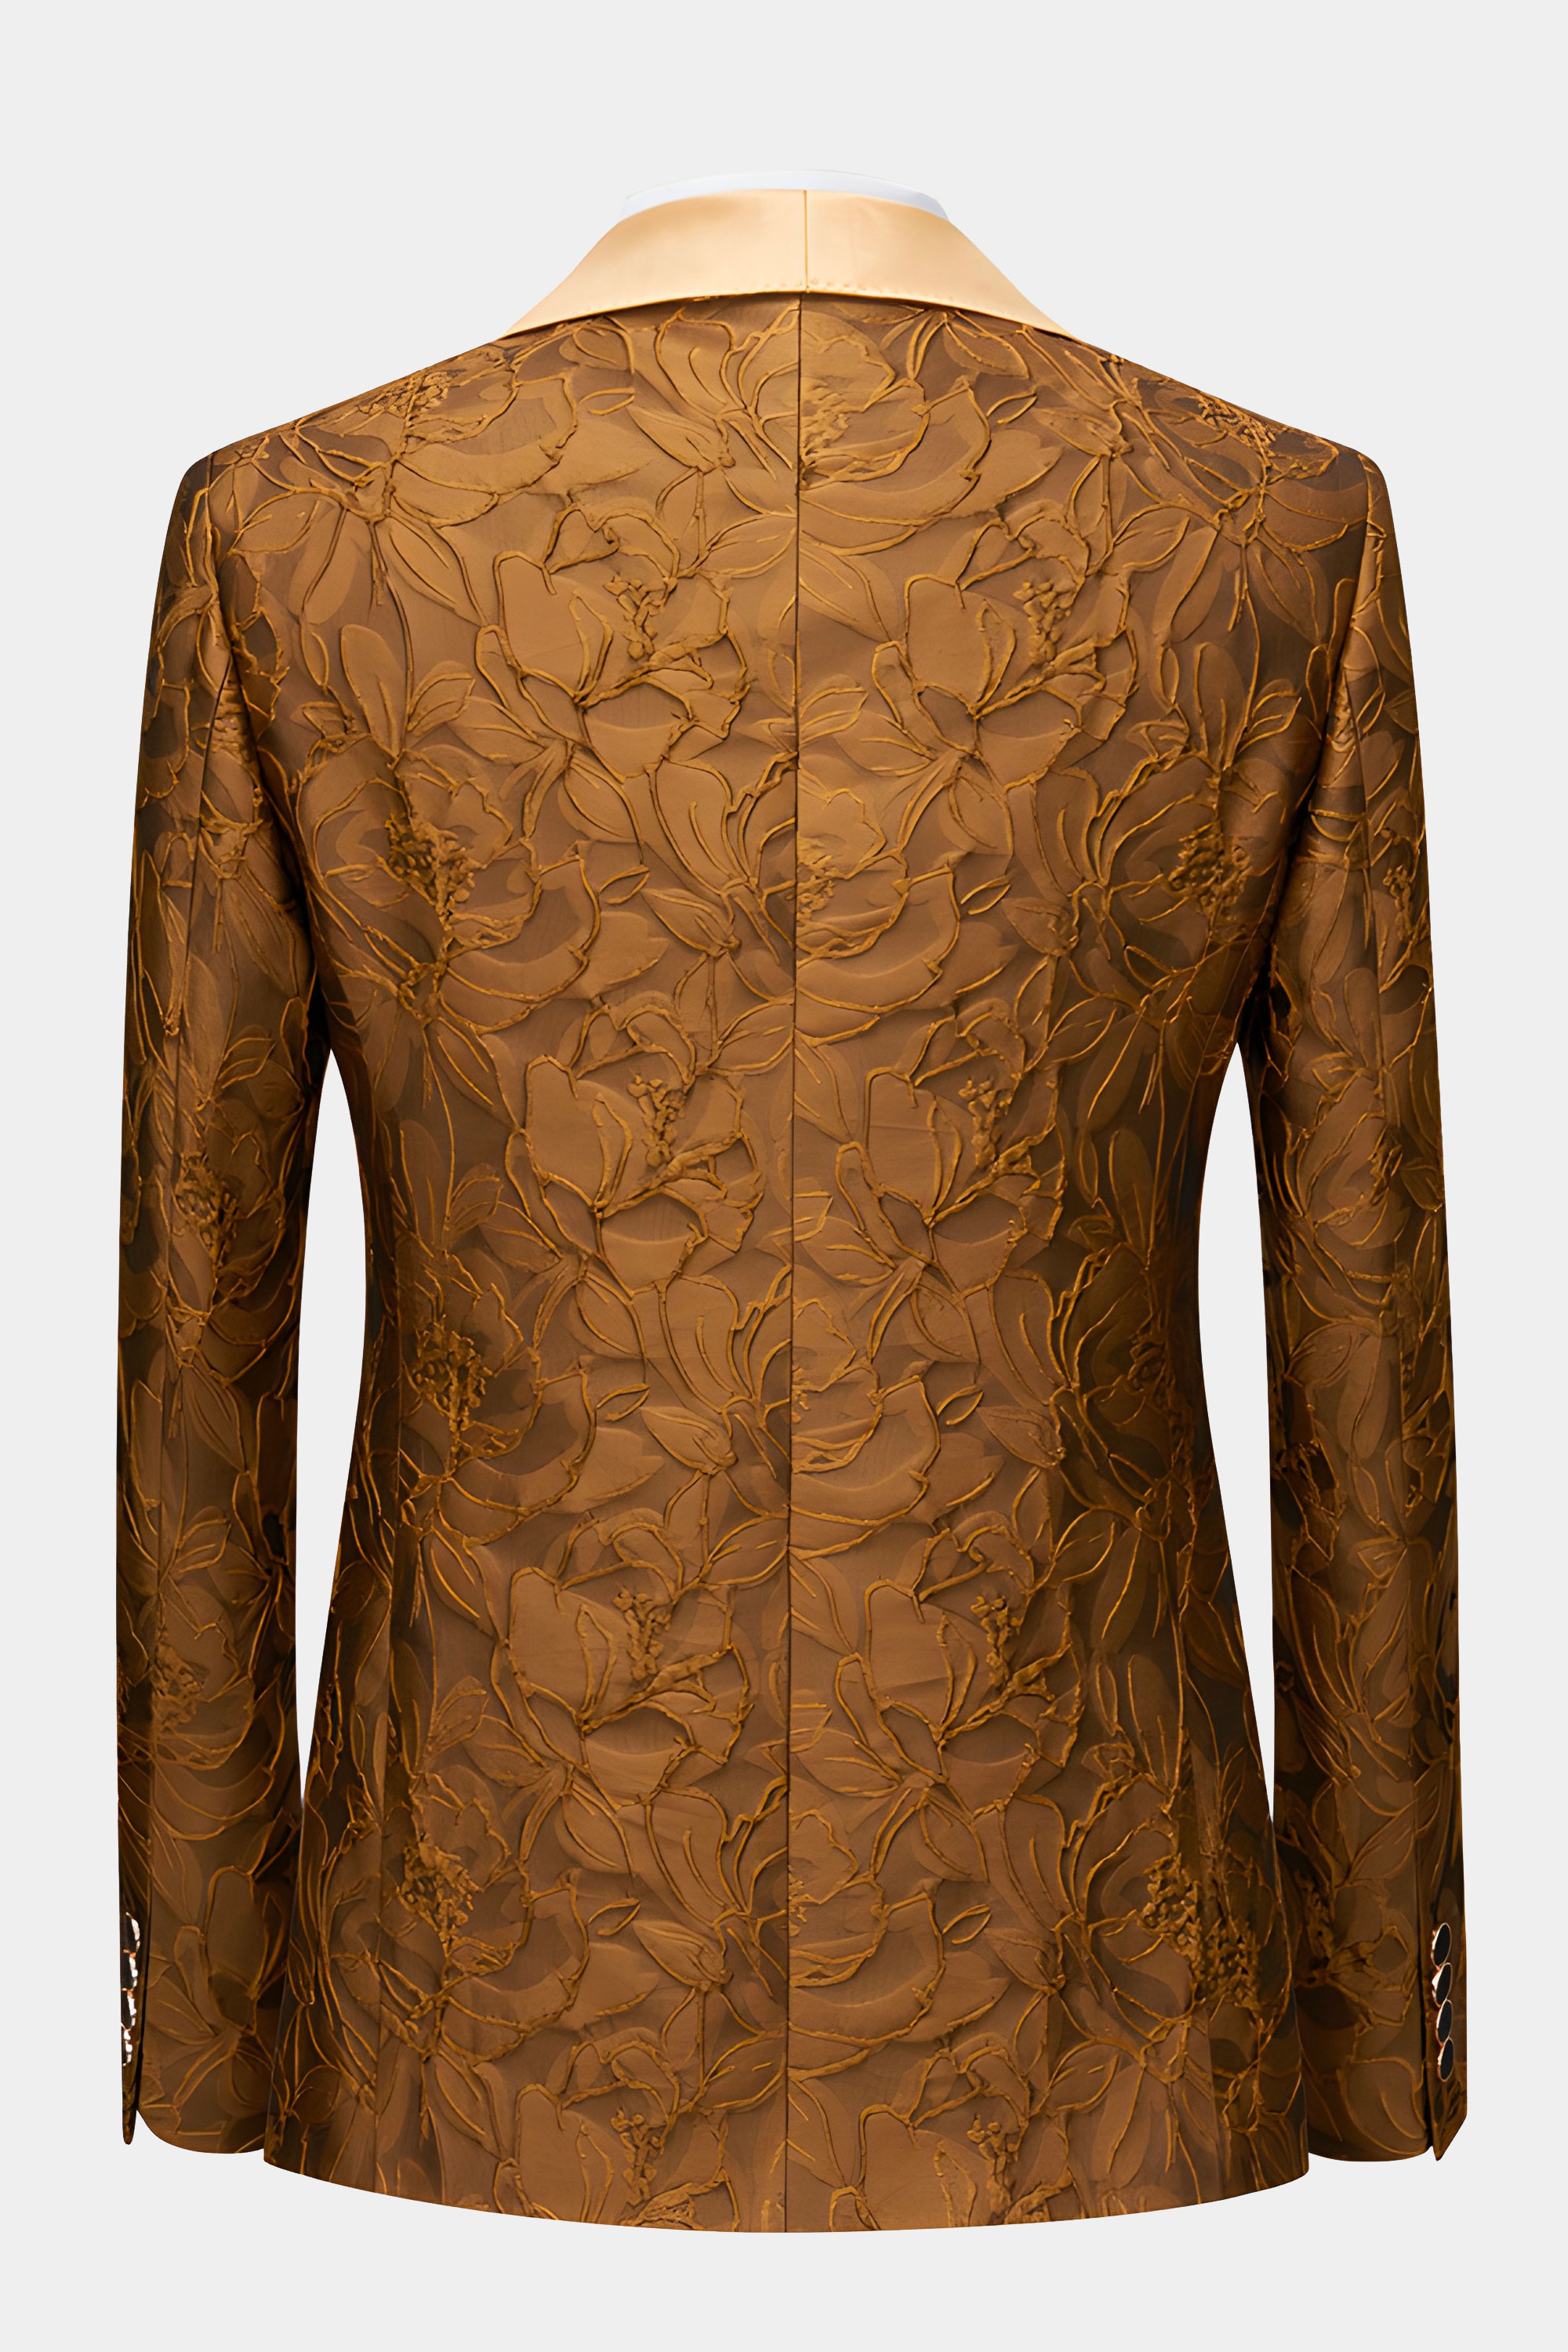 Textured Pecan Brown Tuxedo - 3 Piece 42r Matching Pant